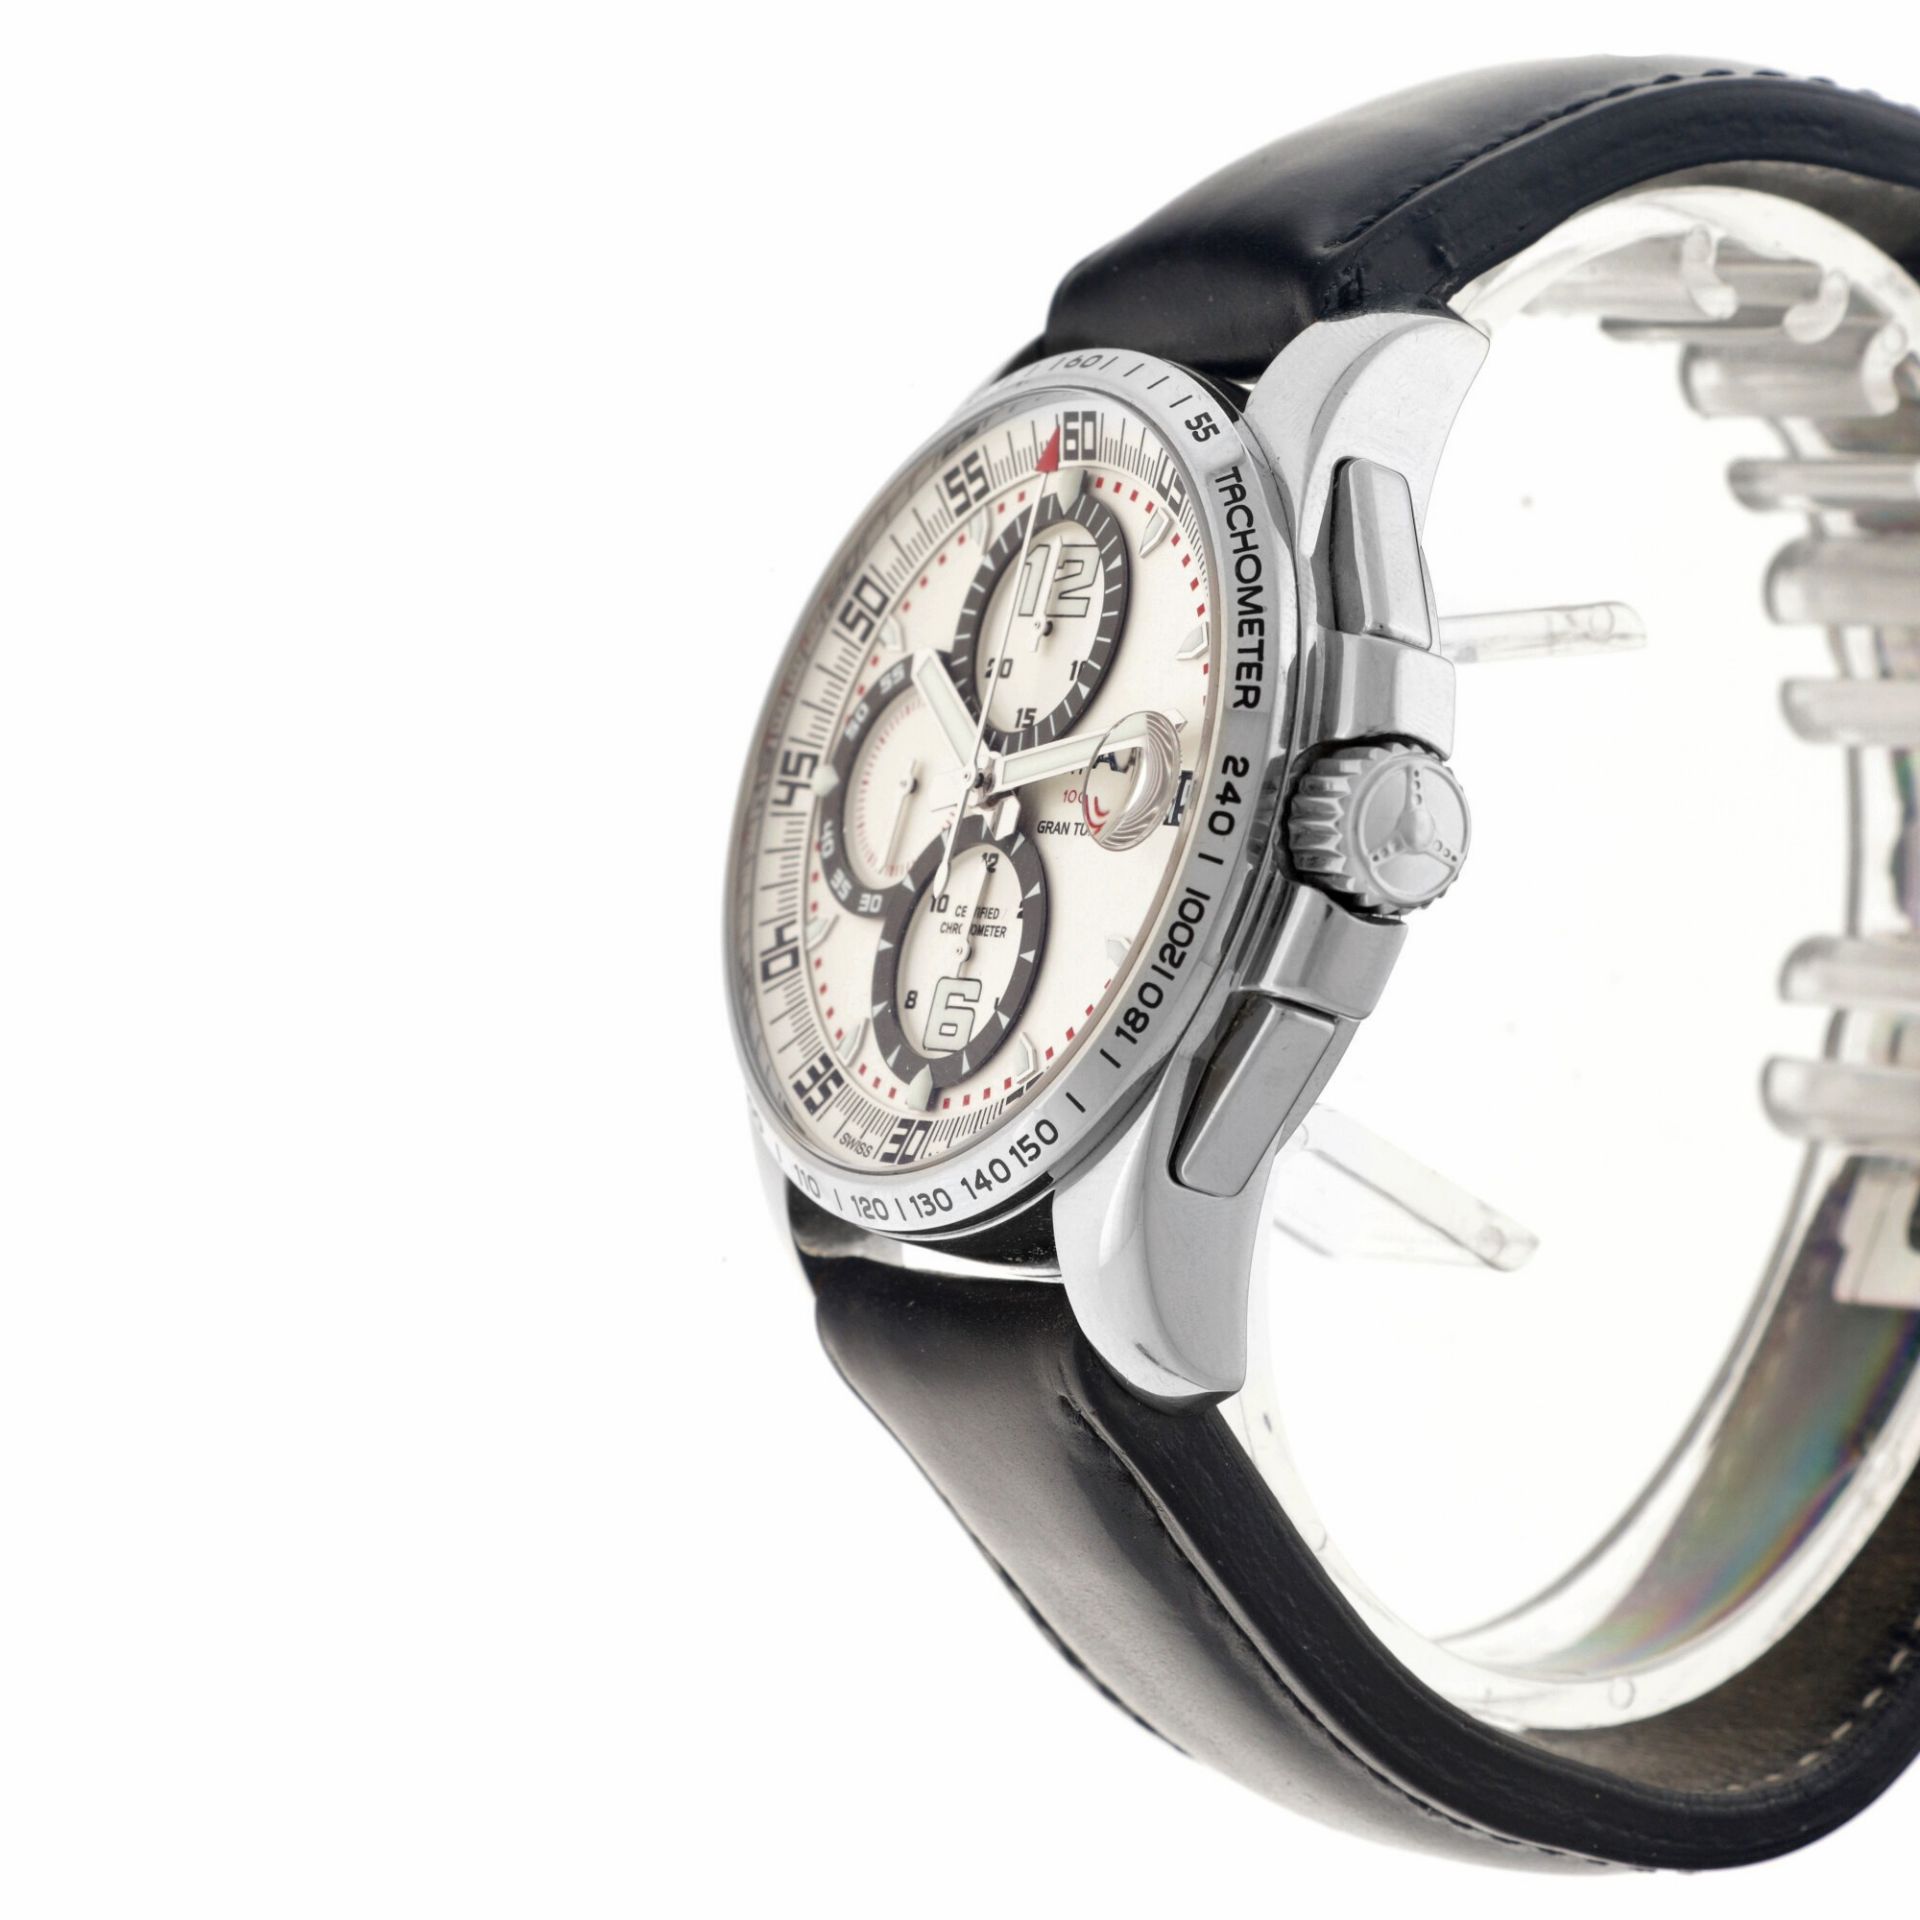 Chopard Mille Miglia Gran Turismo XL 8459 - Men's watch - 2014. - Image 5 of 6